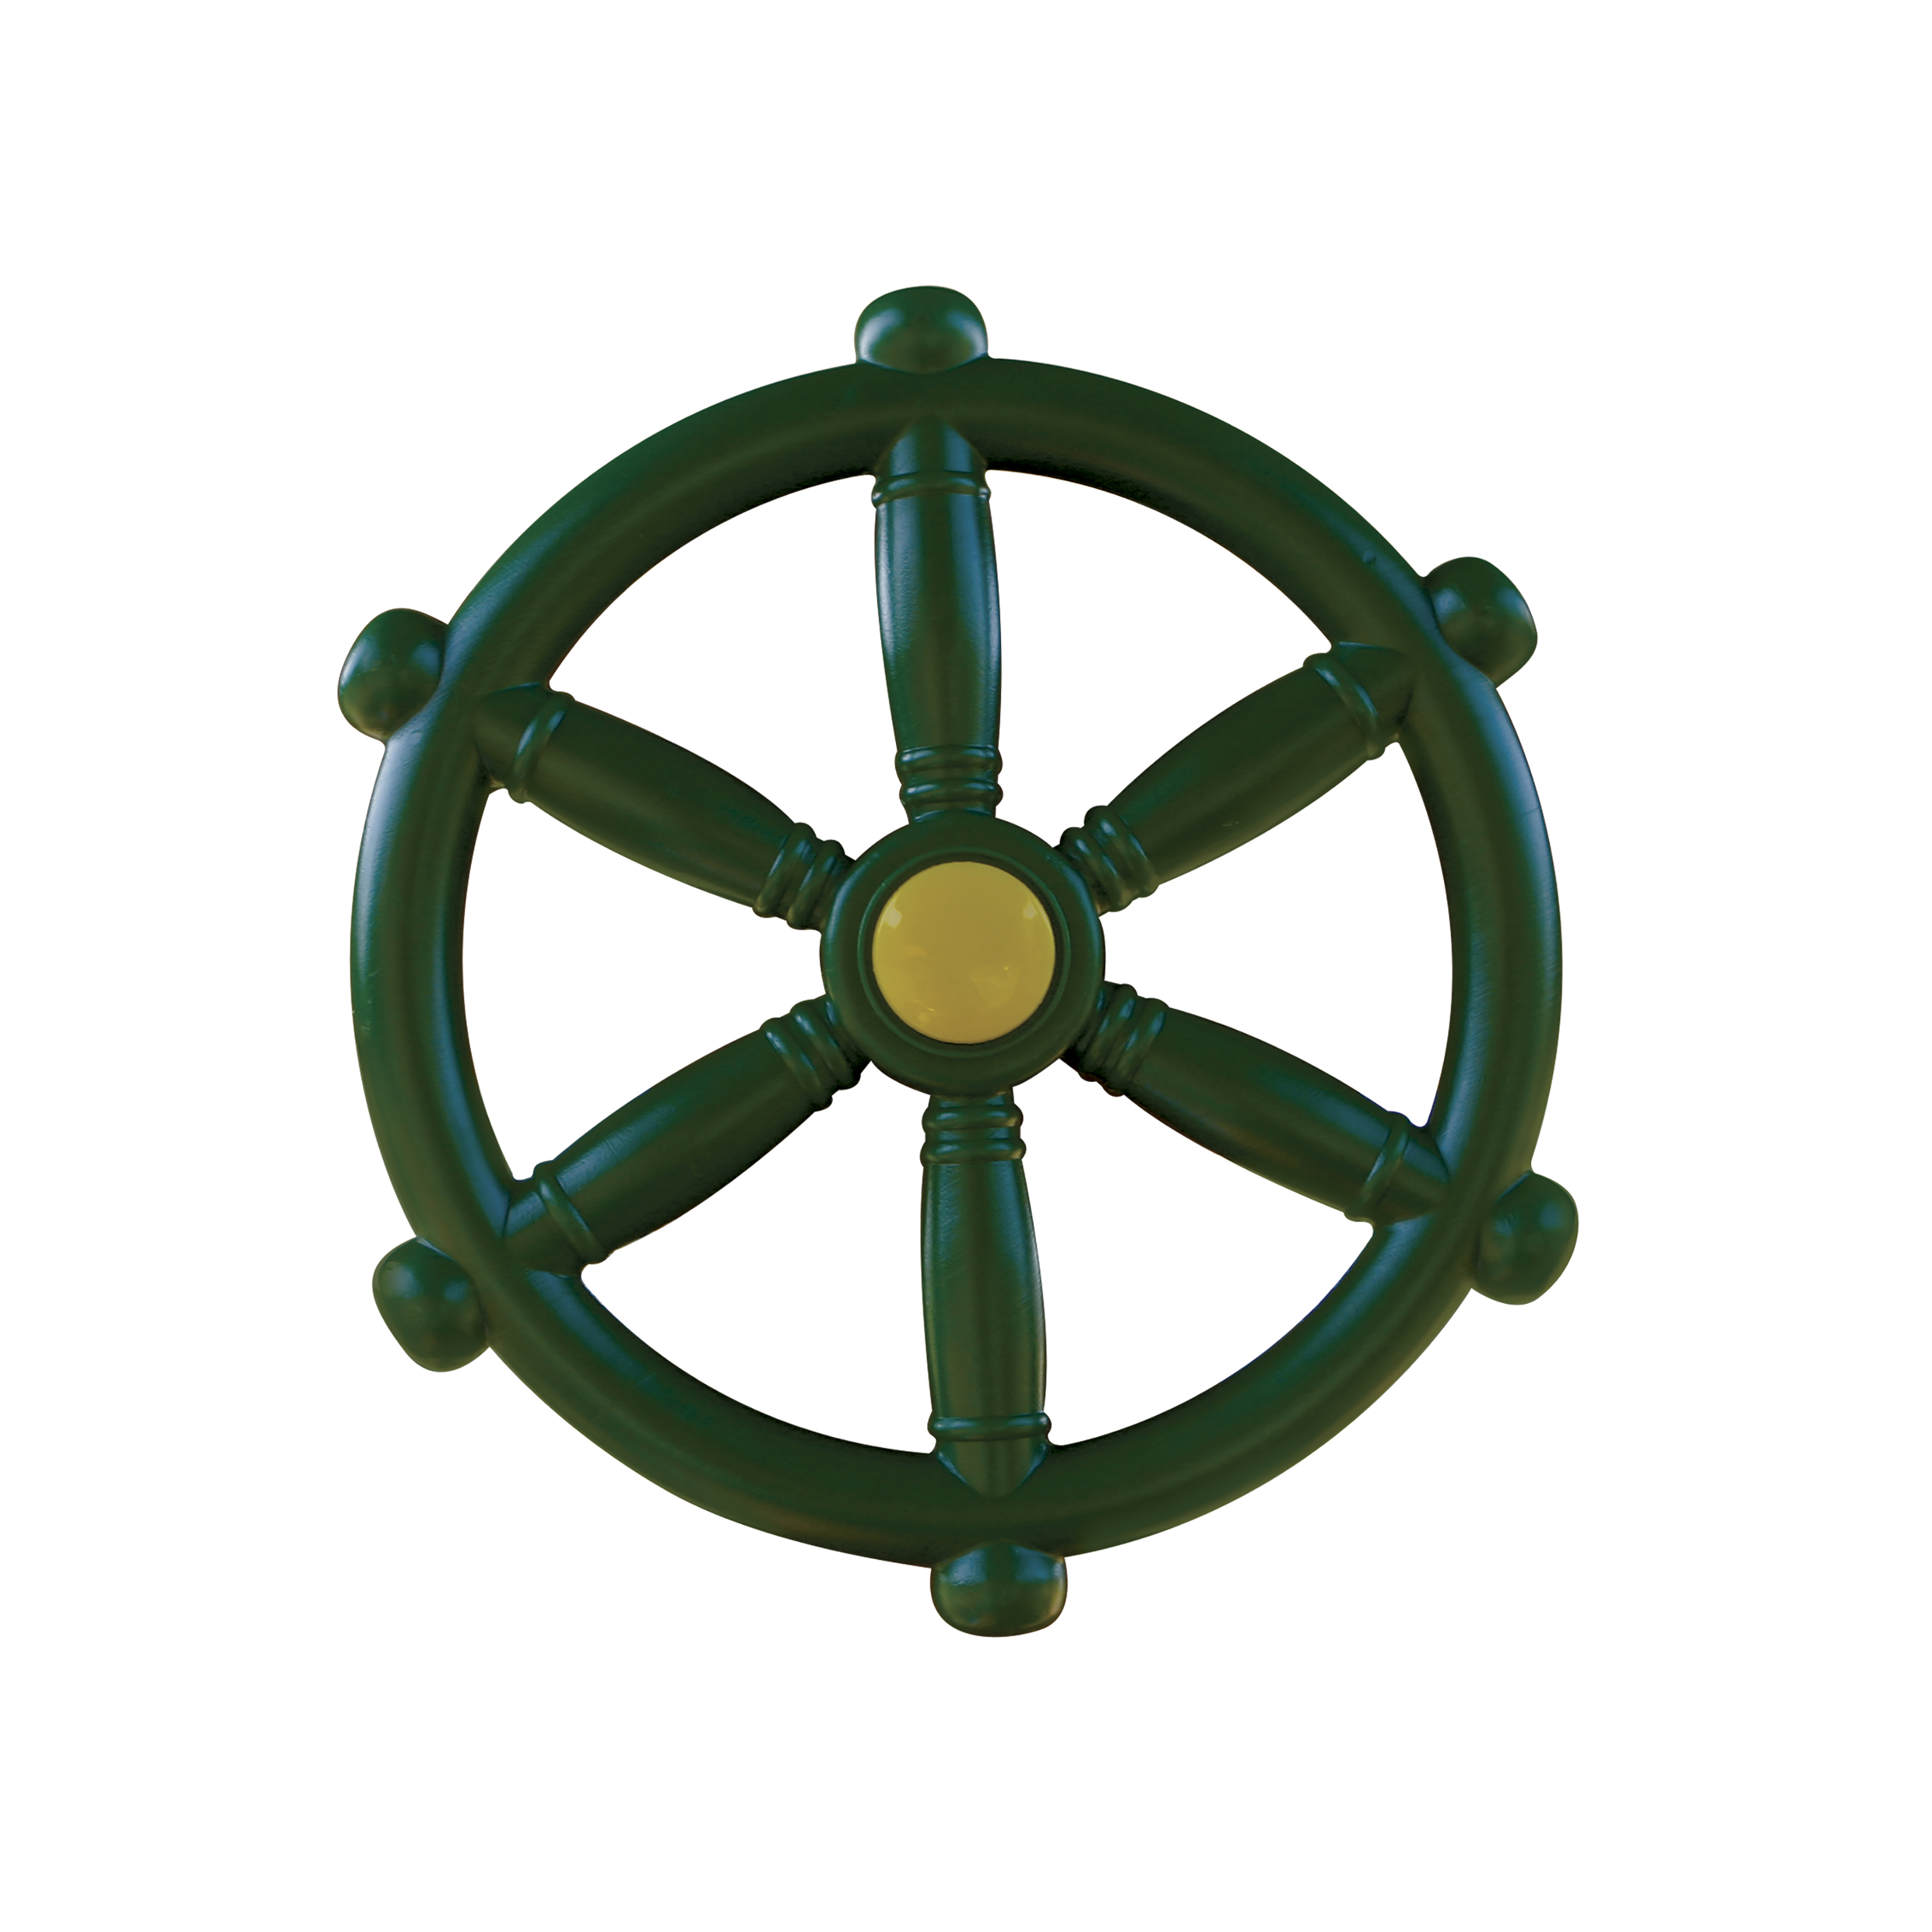 Gorilla Playsets 12" Diameter Ship's Wheel with Mounting Hardware